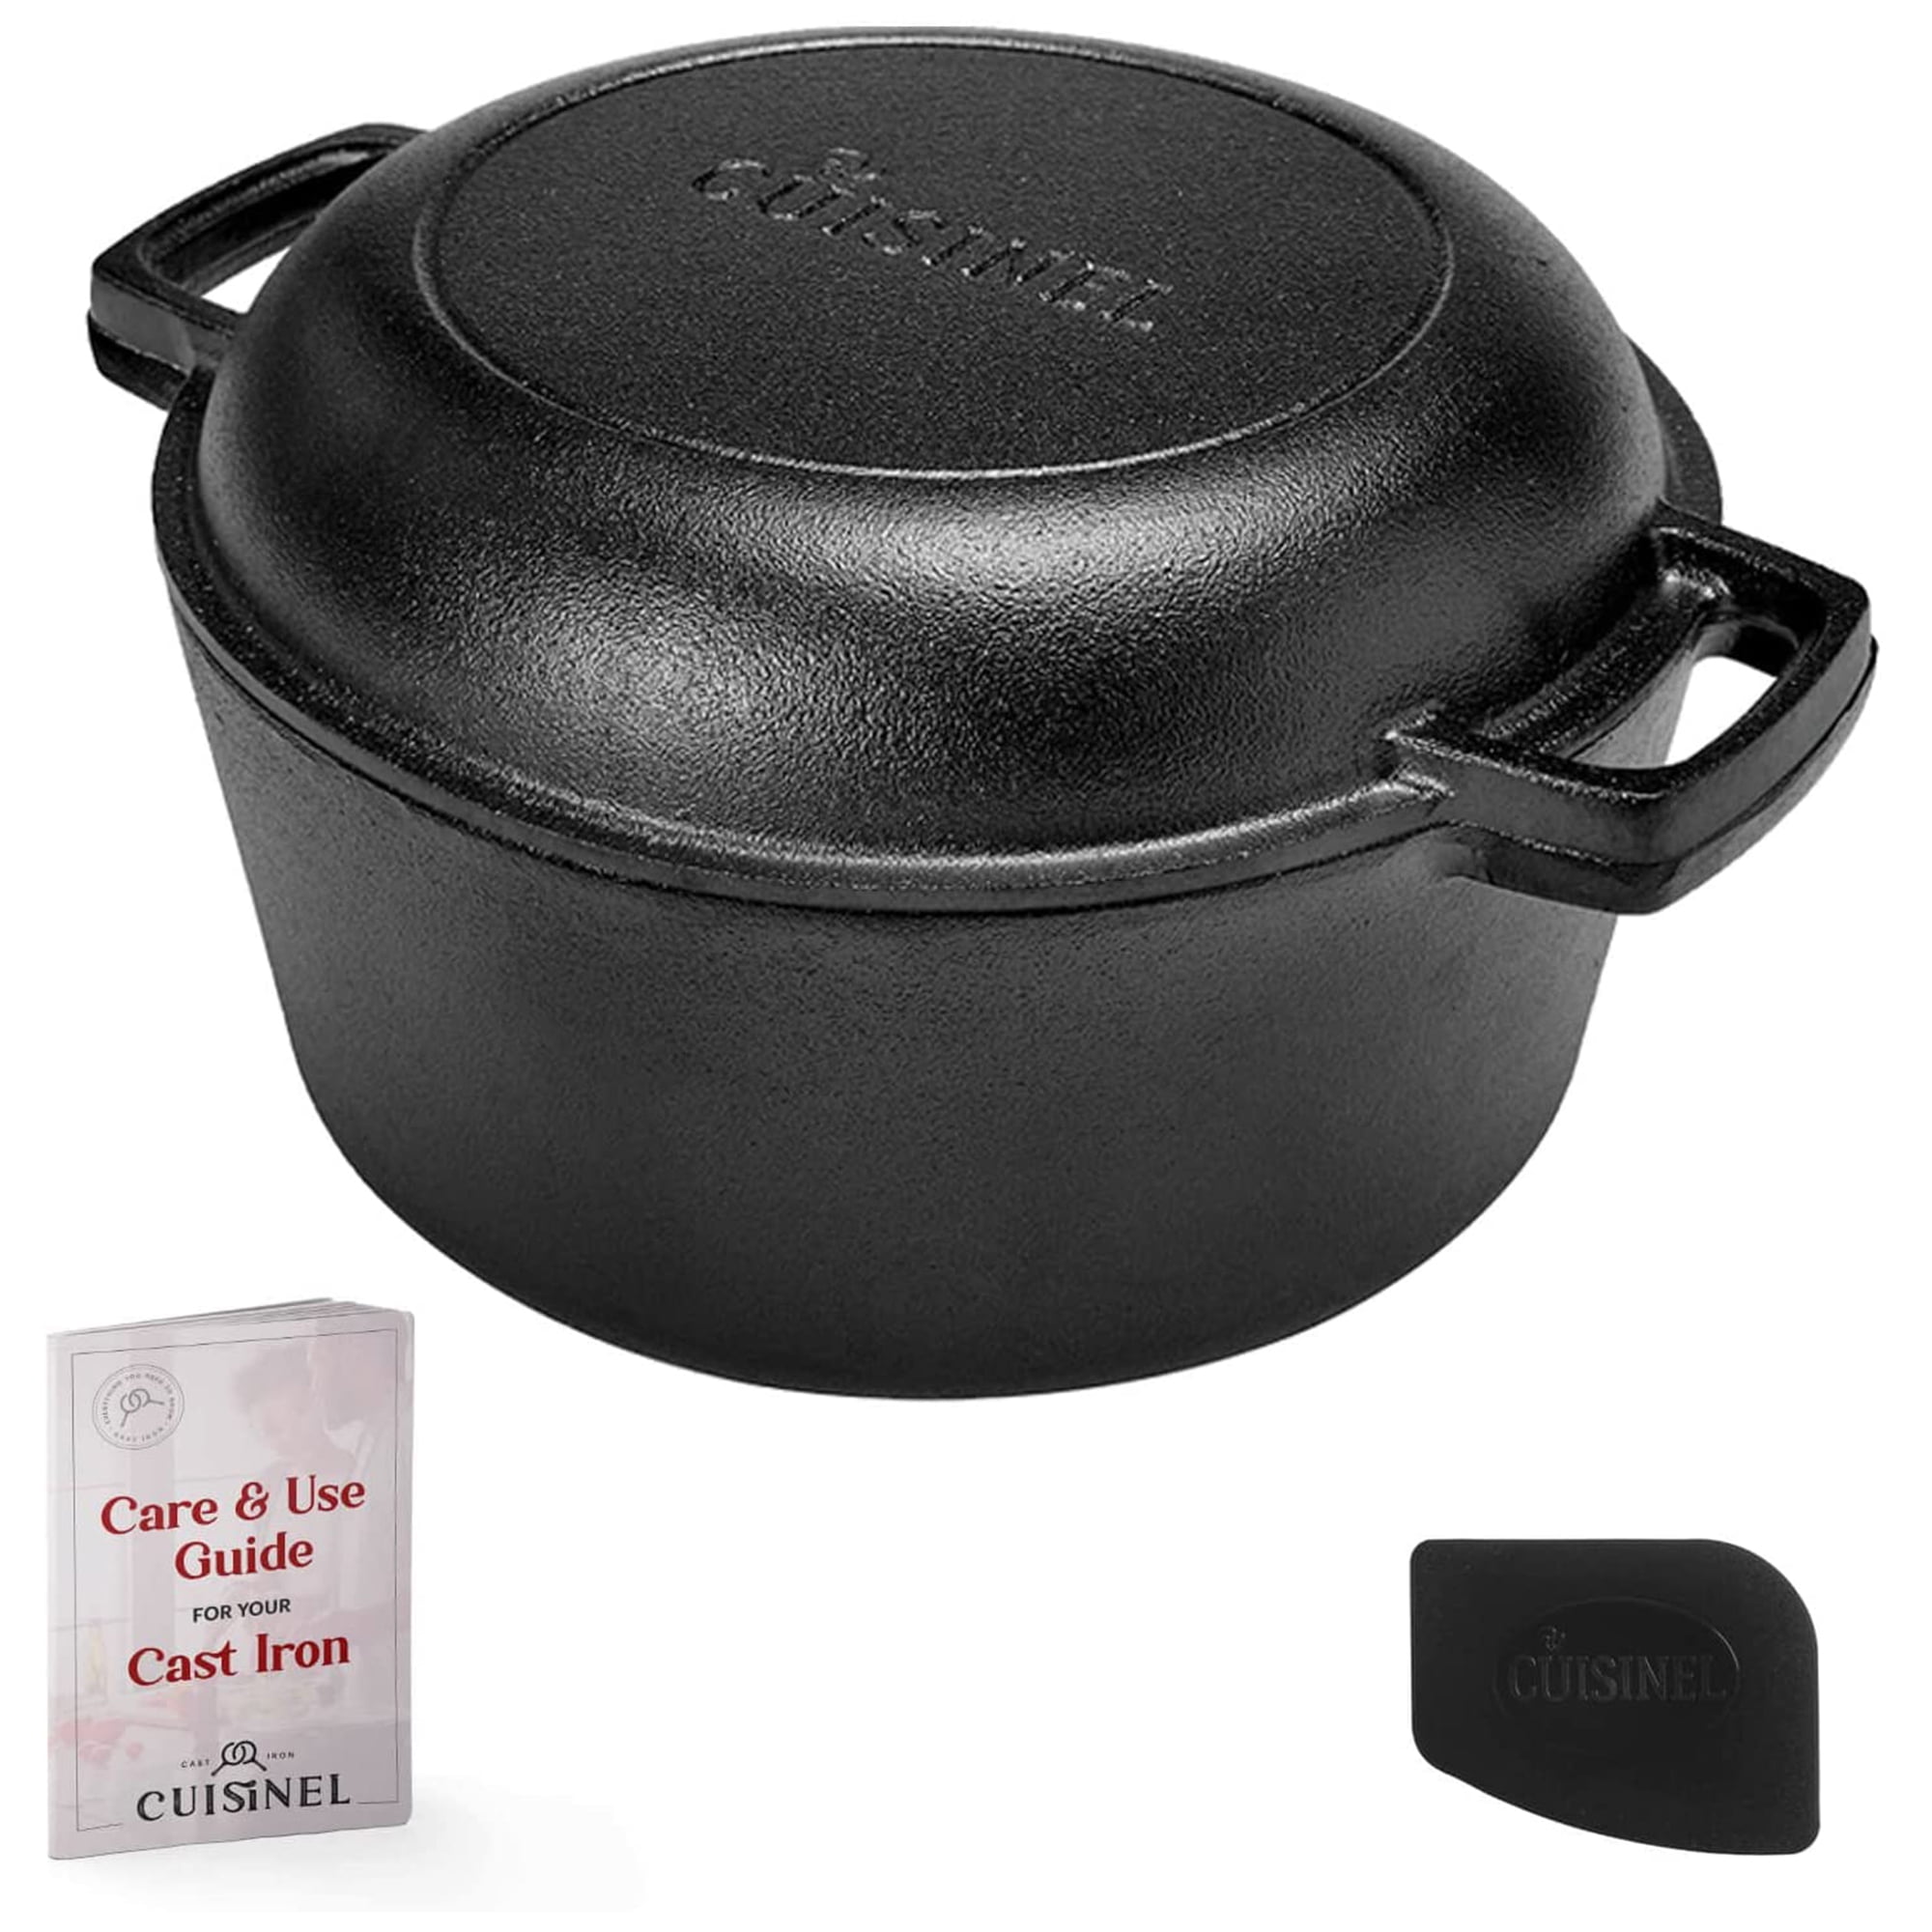 Cuisinel Cast Iron Pot with Lid 2-in-1 Multi Cooker Pre-Seasoned